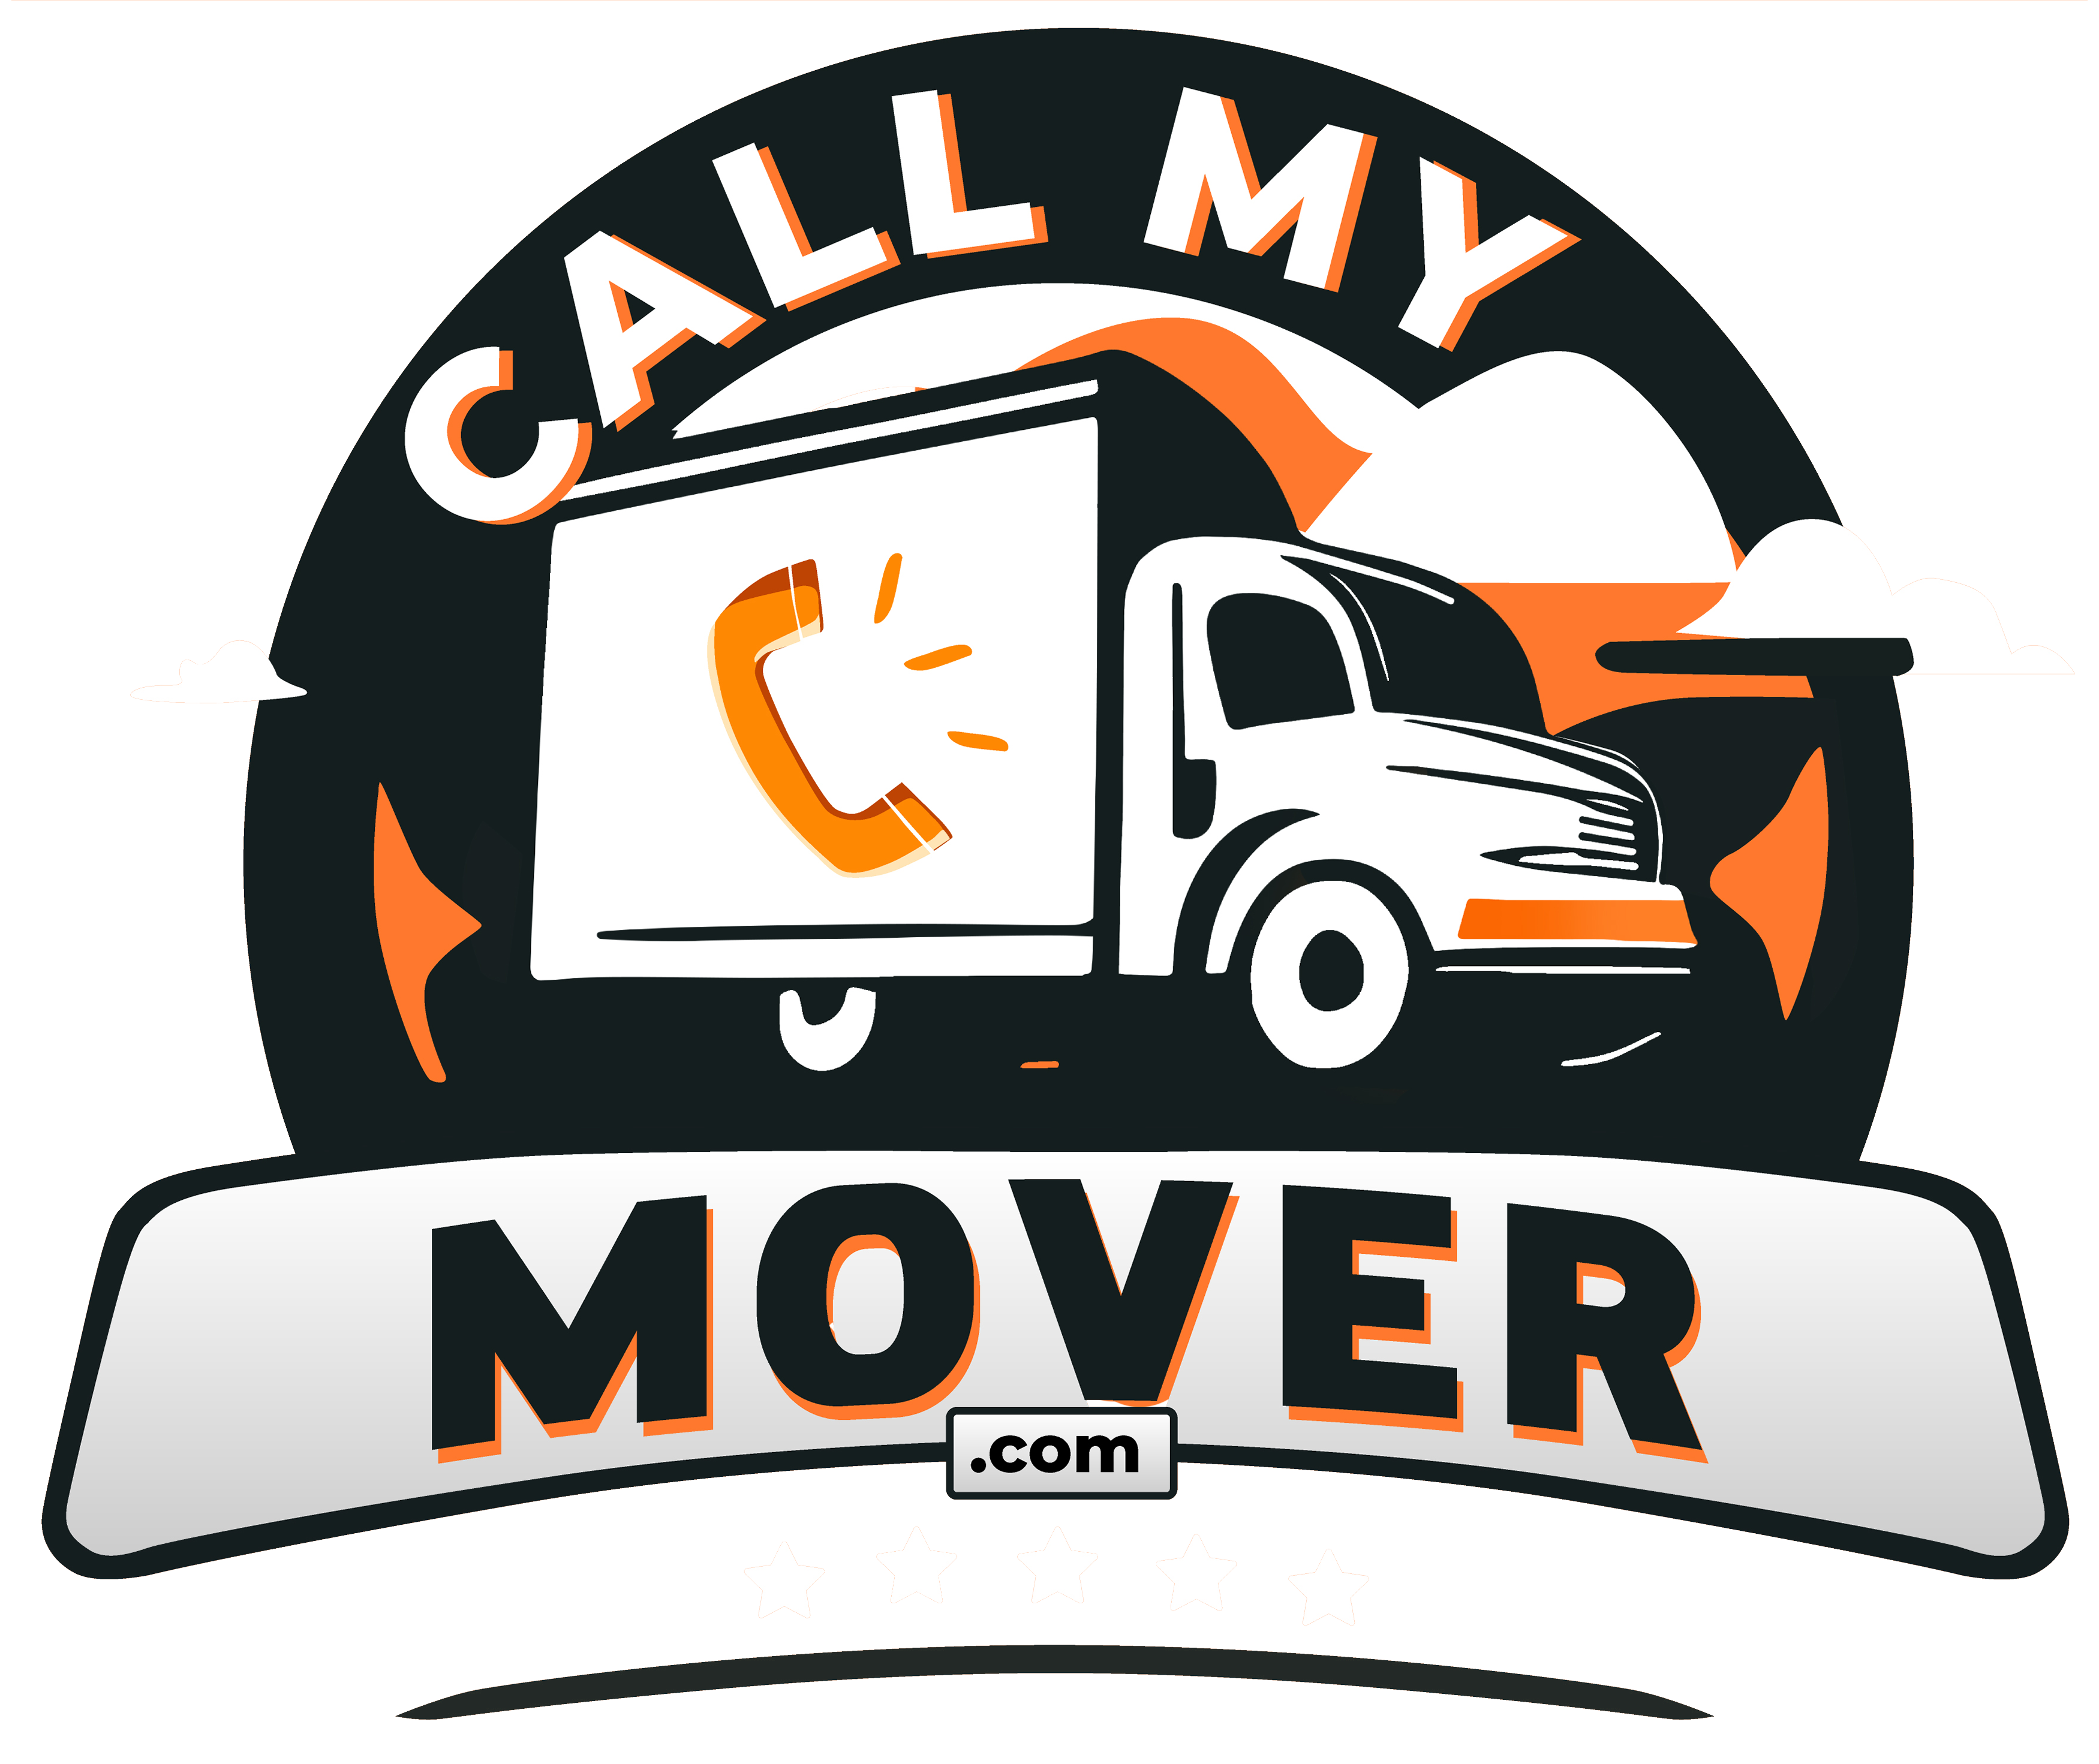 callmymover-logo